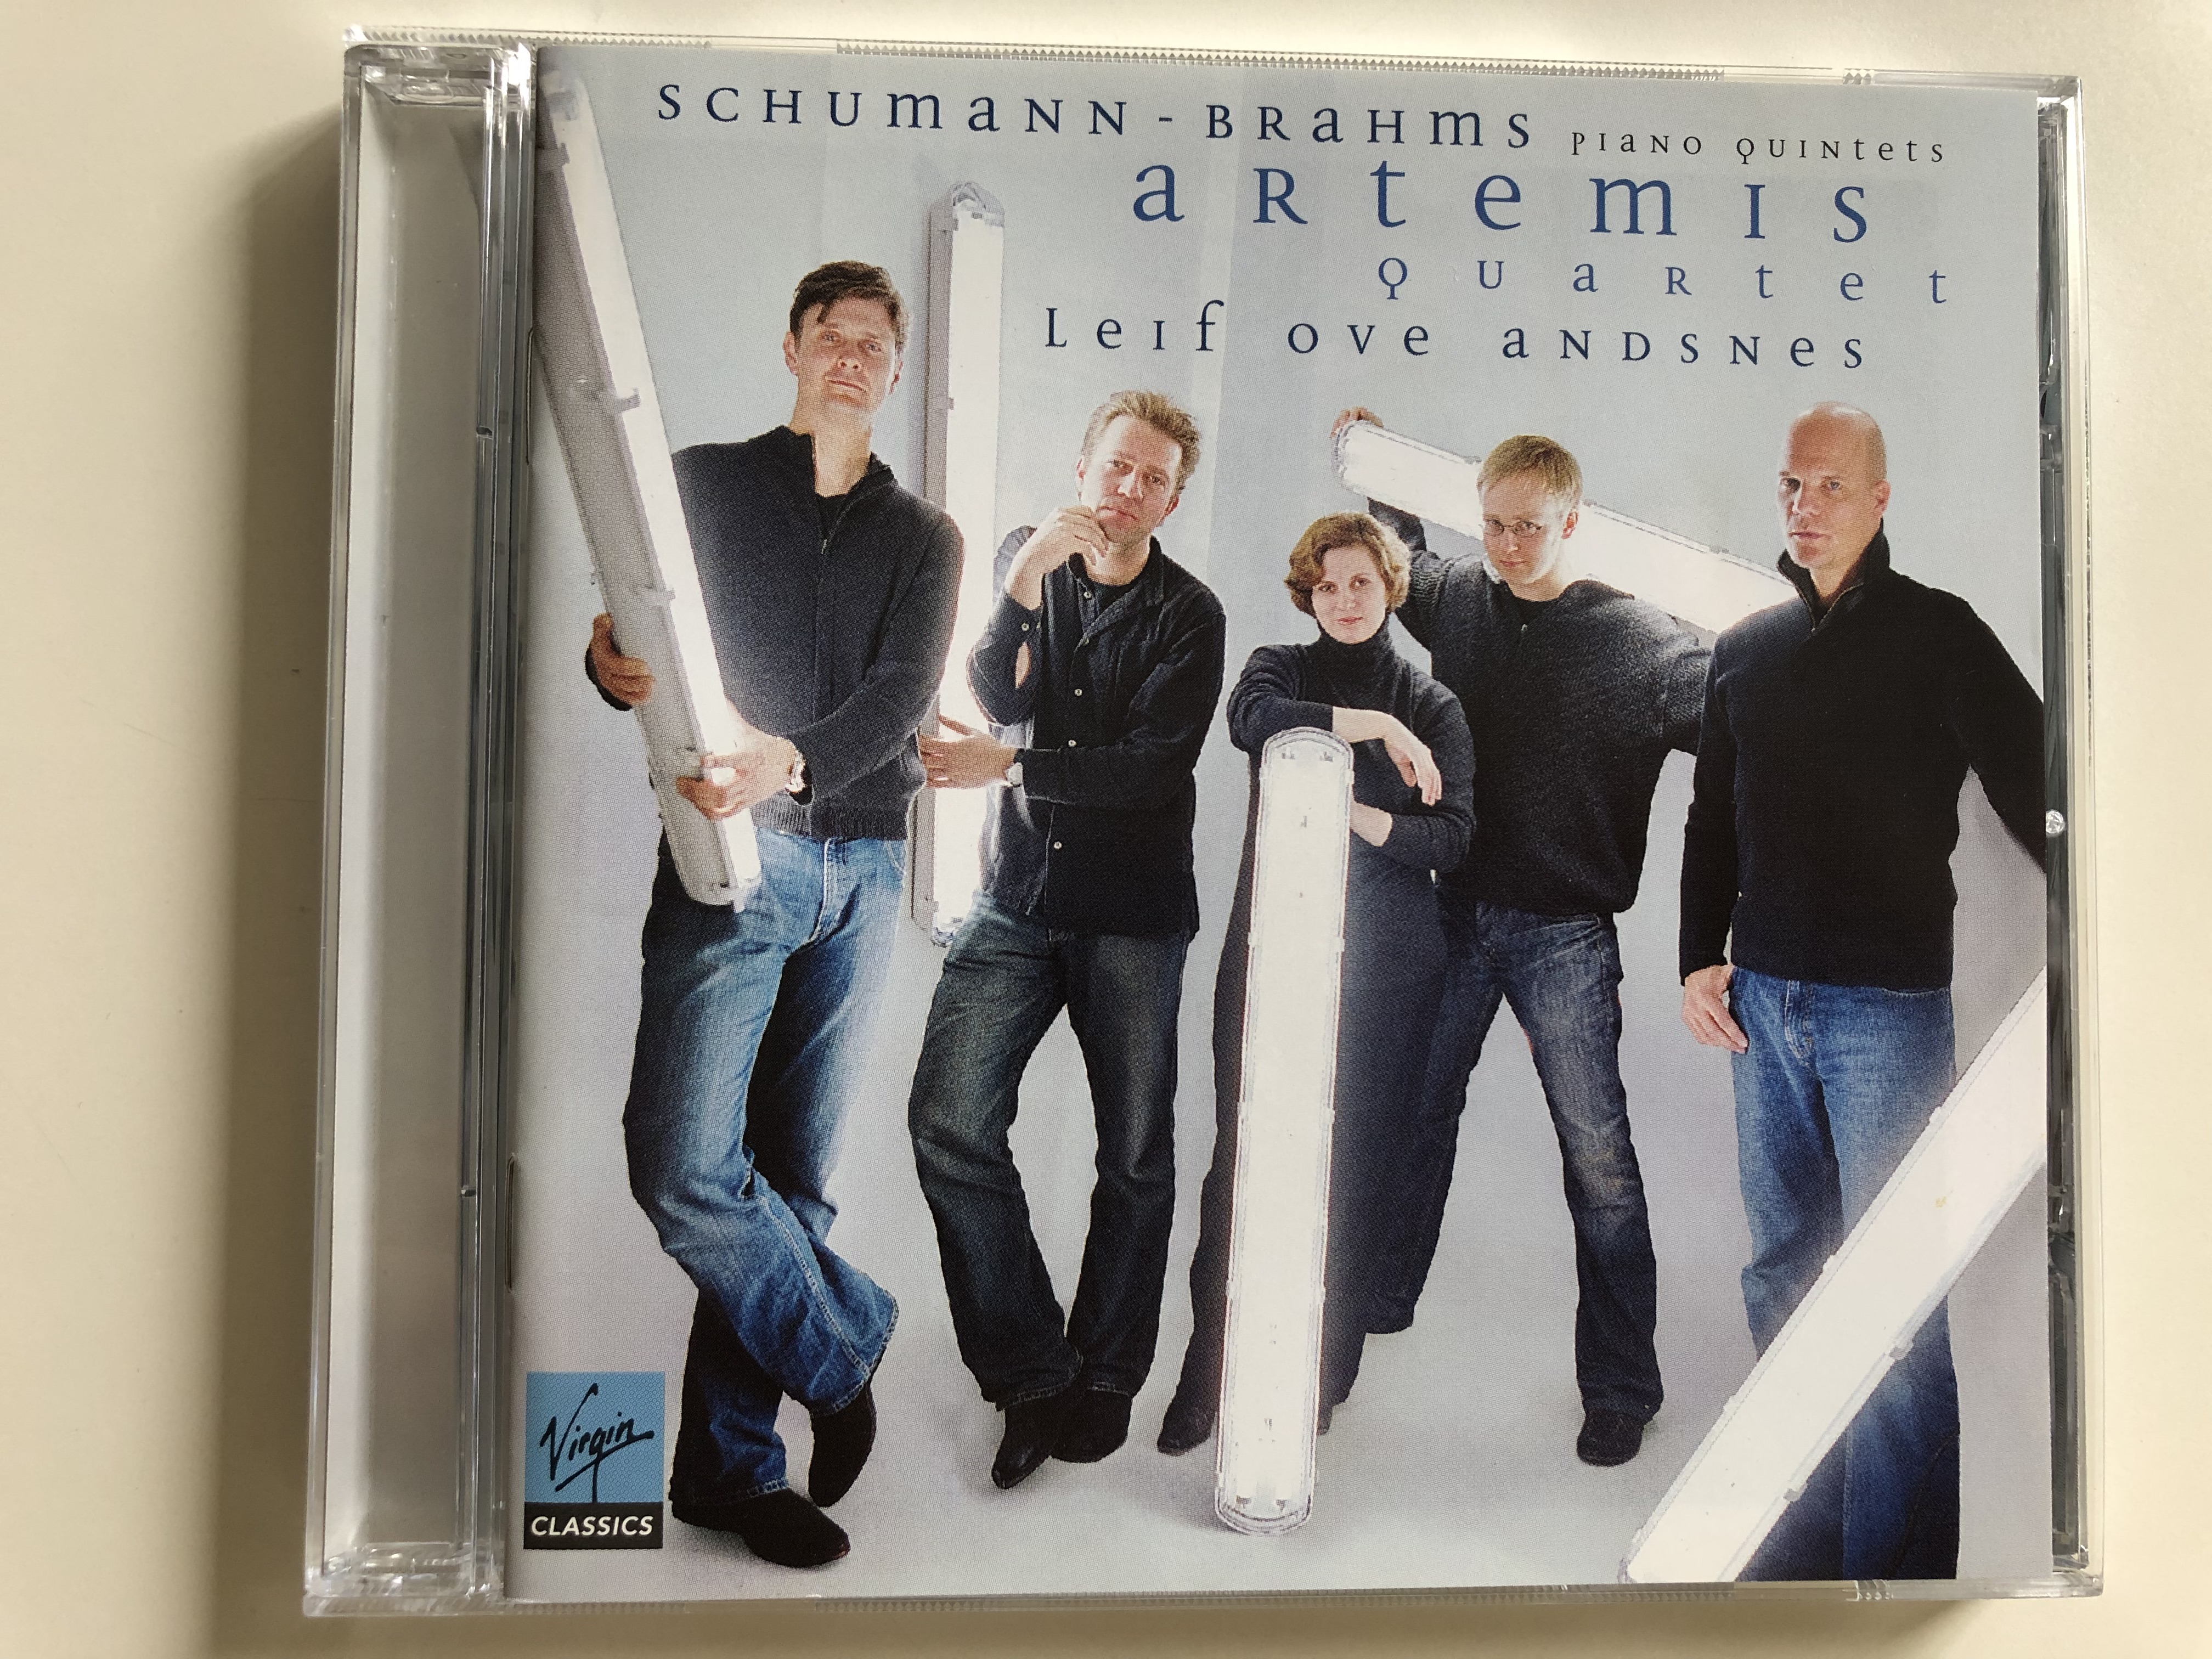 schumann-brahms-piano-quintets-artemis-quartet-leif-ove-andsnes-piano-virgin-classics-audio-cd-2007-emi-1-.jpg